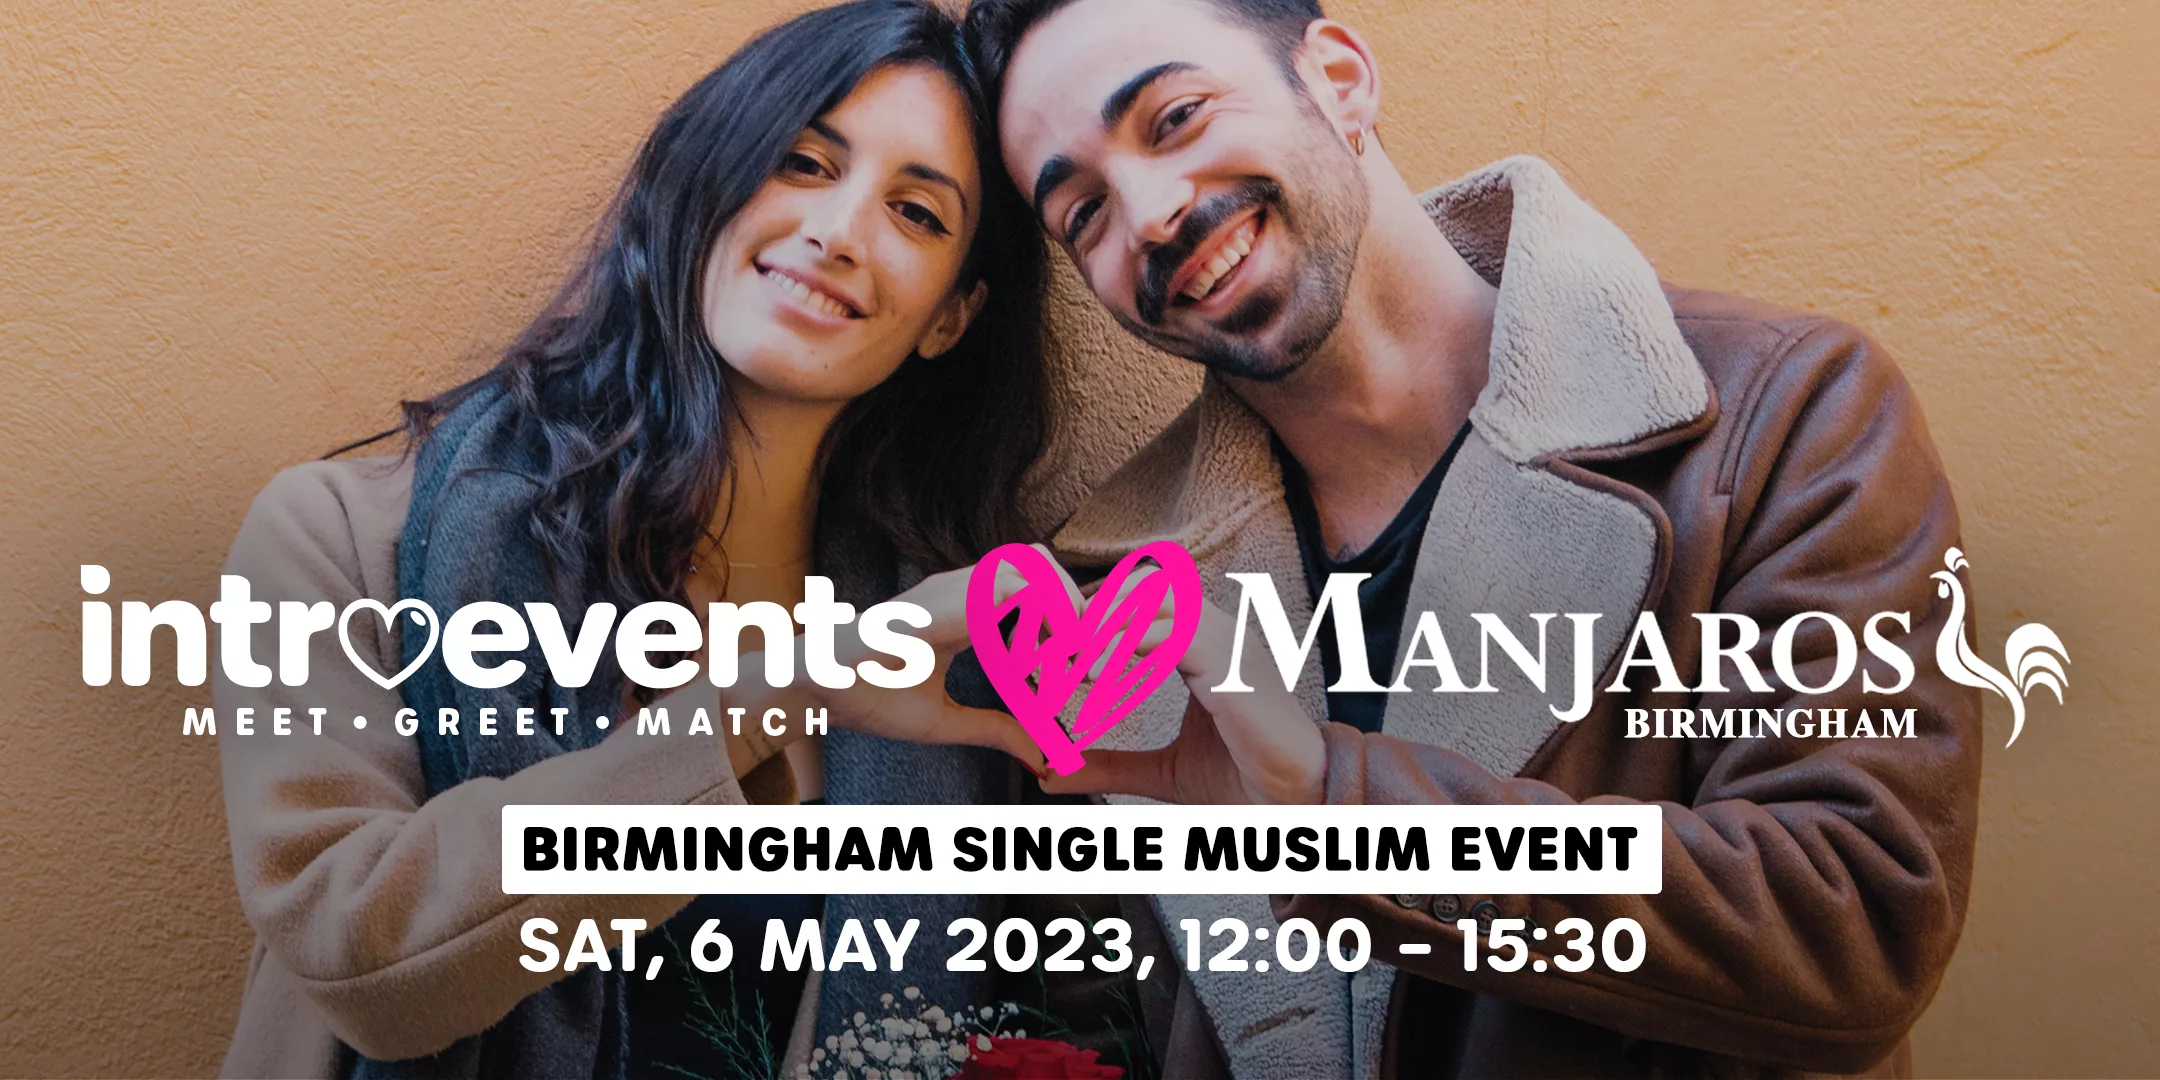 Muslim marriage events Birmingham